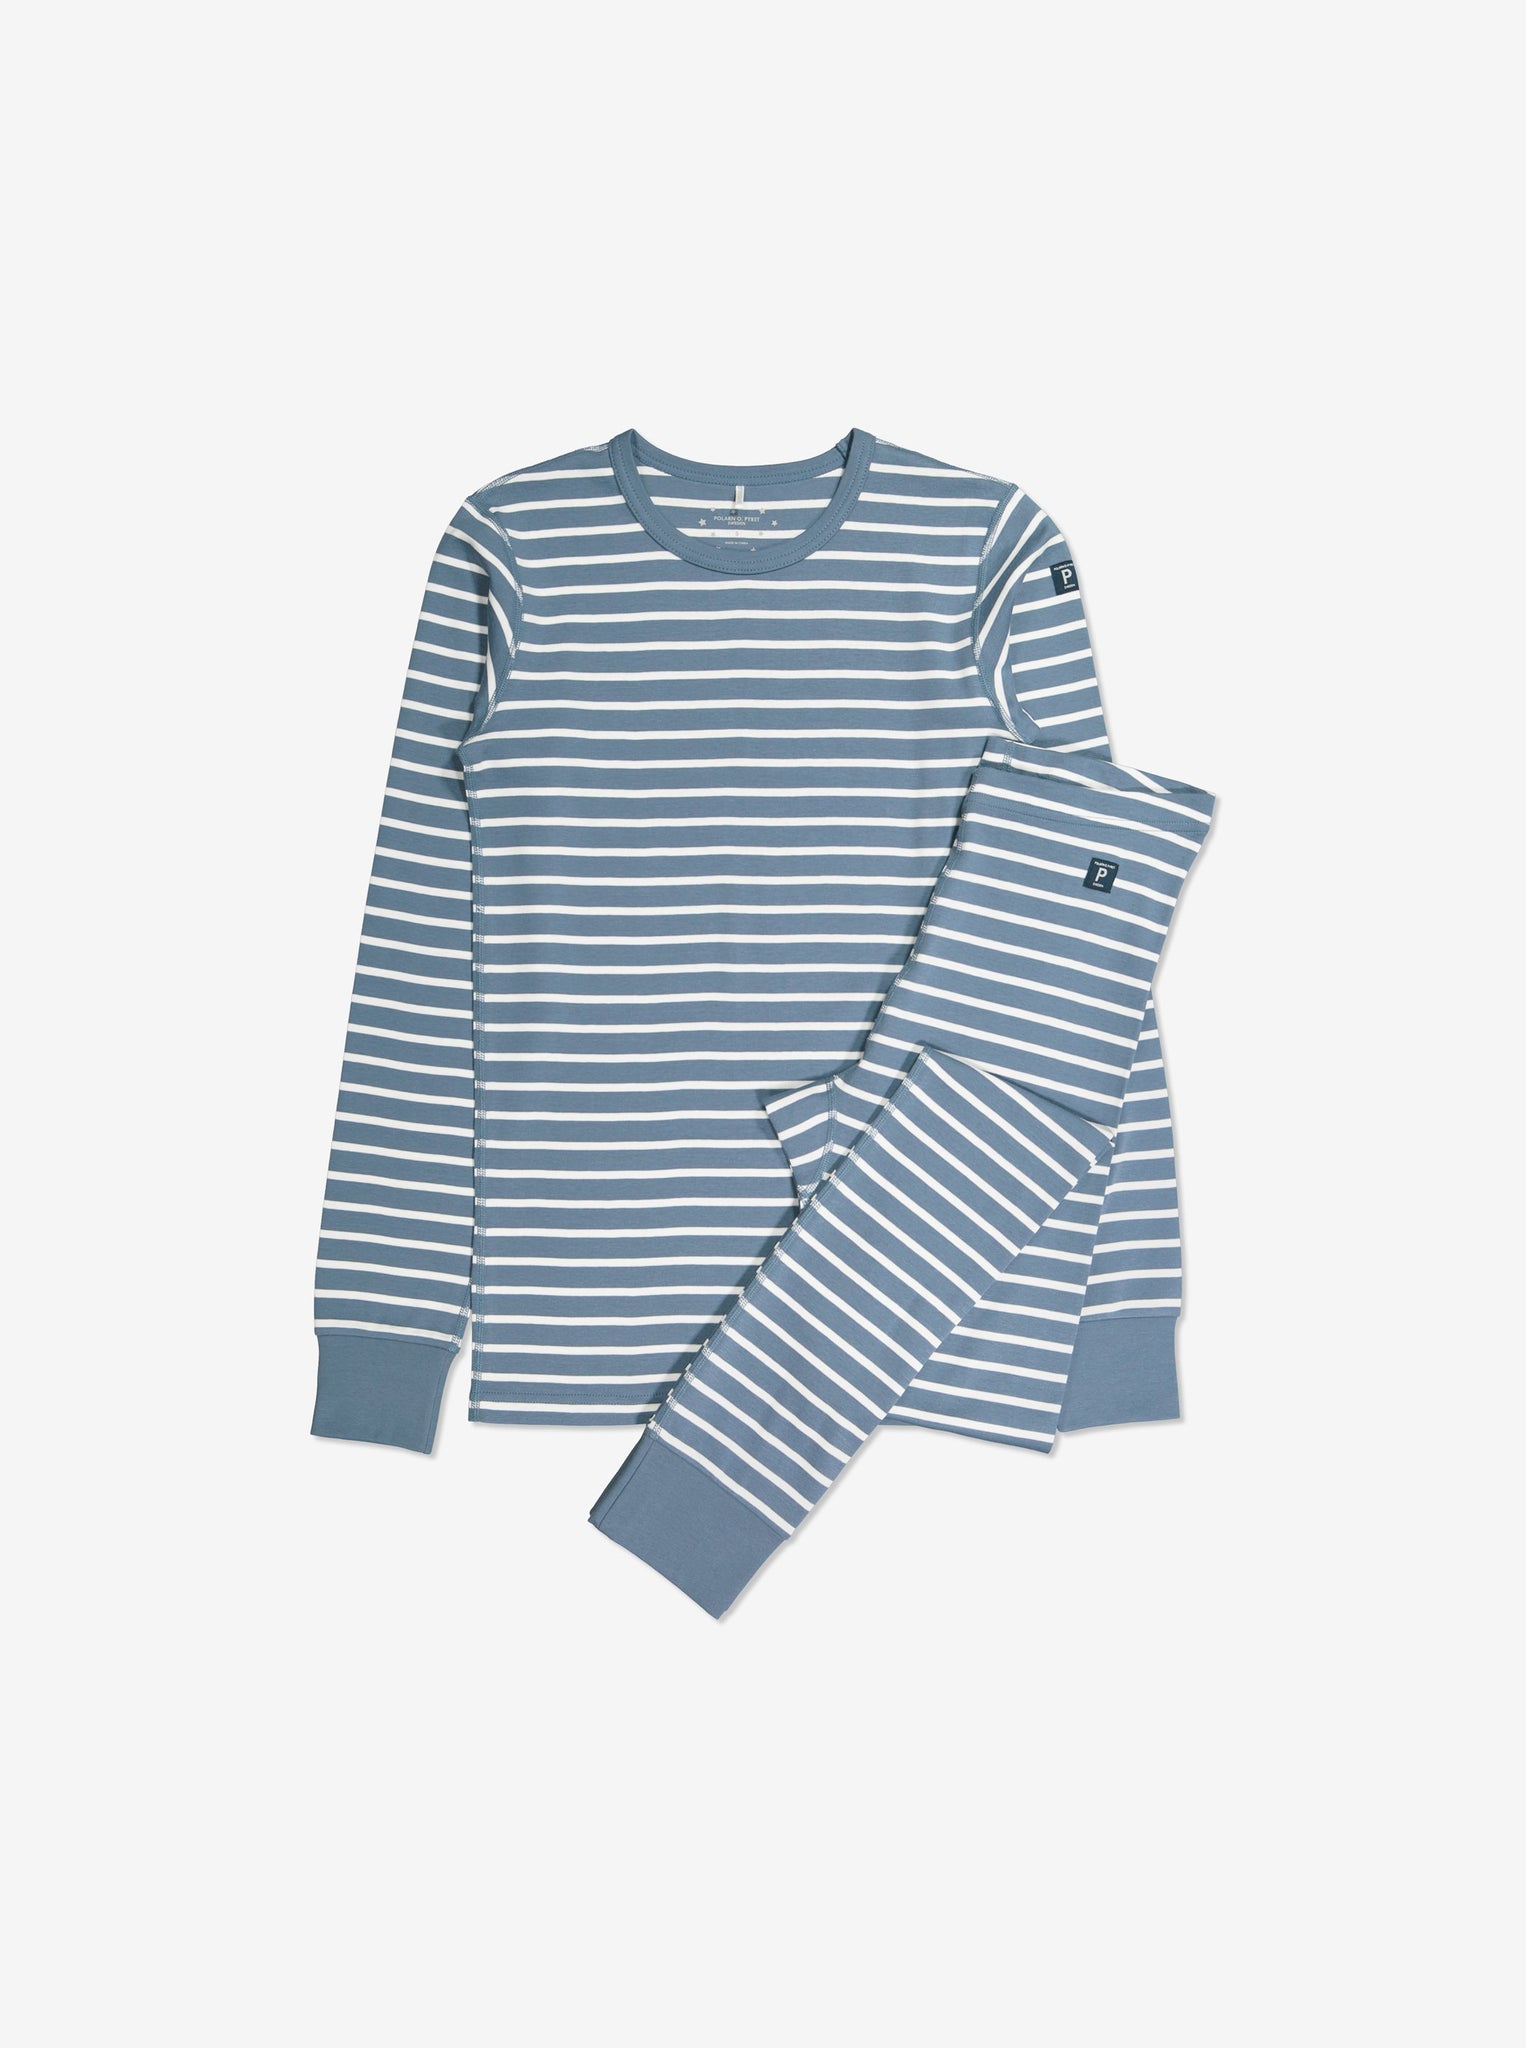  Organic Striped Blue Adult Pyjamas from Polarn O. Pyret Kidswear. Made with 100% organic cotton.